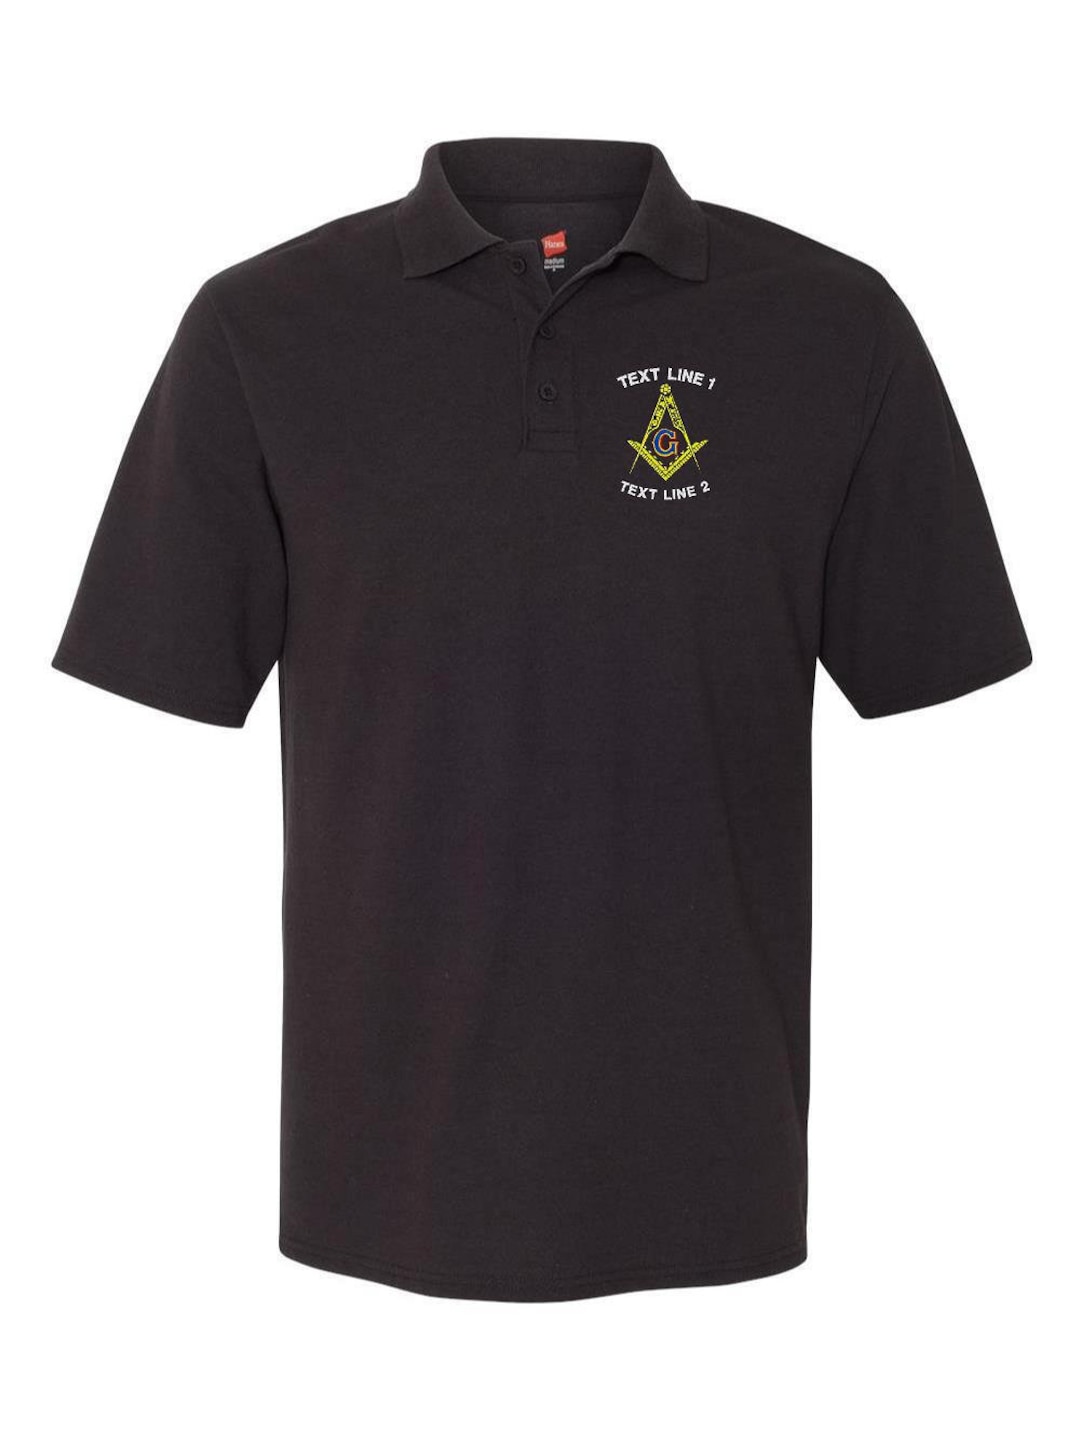 Mason / Masonic Lodge Square & Compass Embroidered Polo Shirt - Etsy